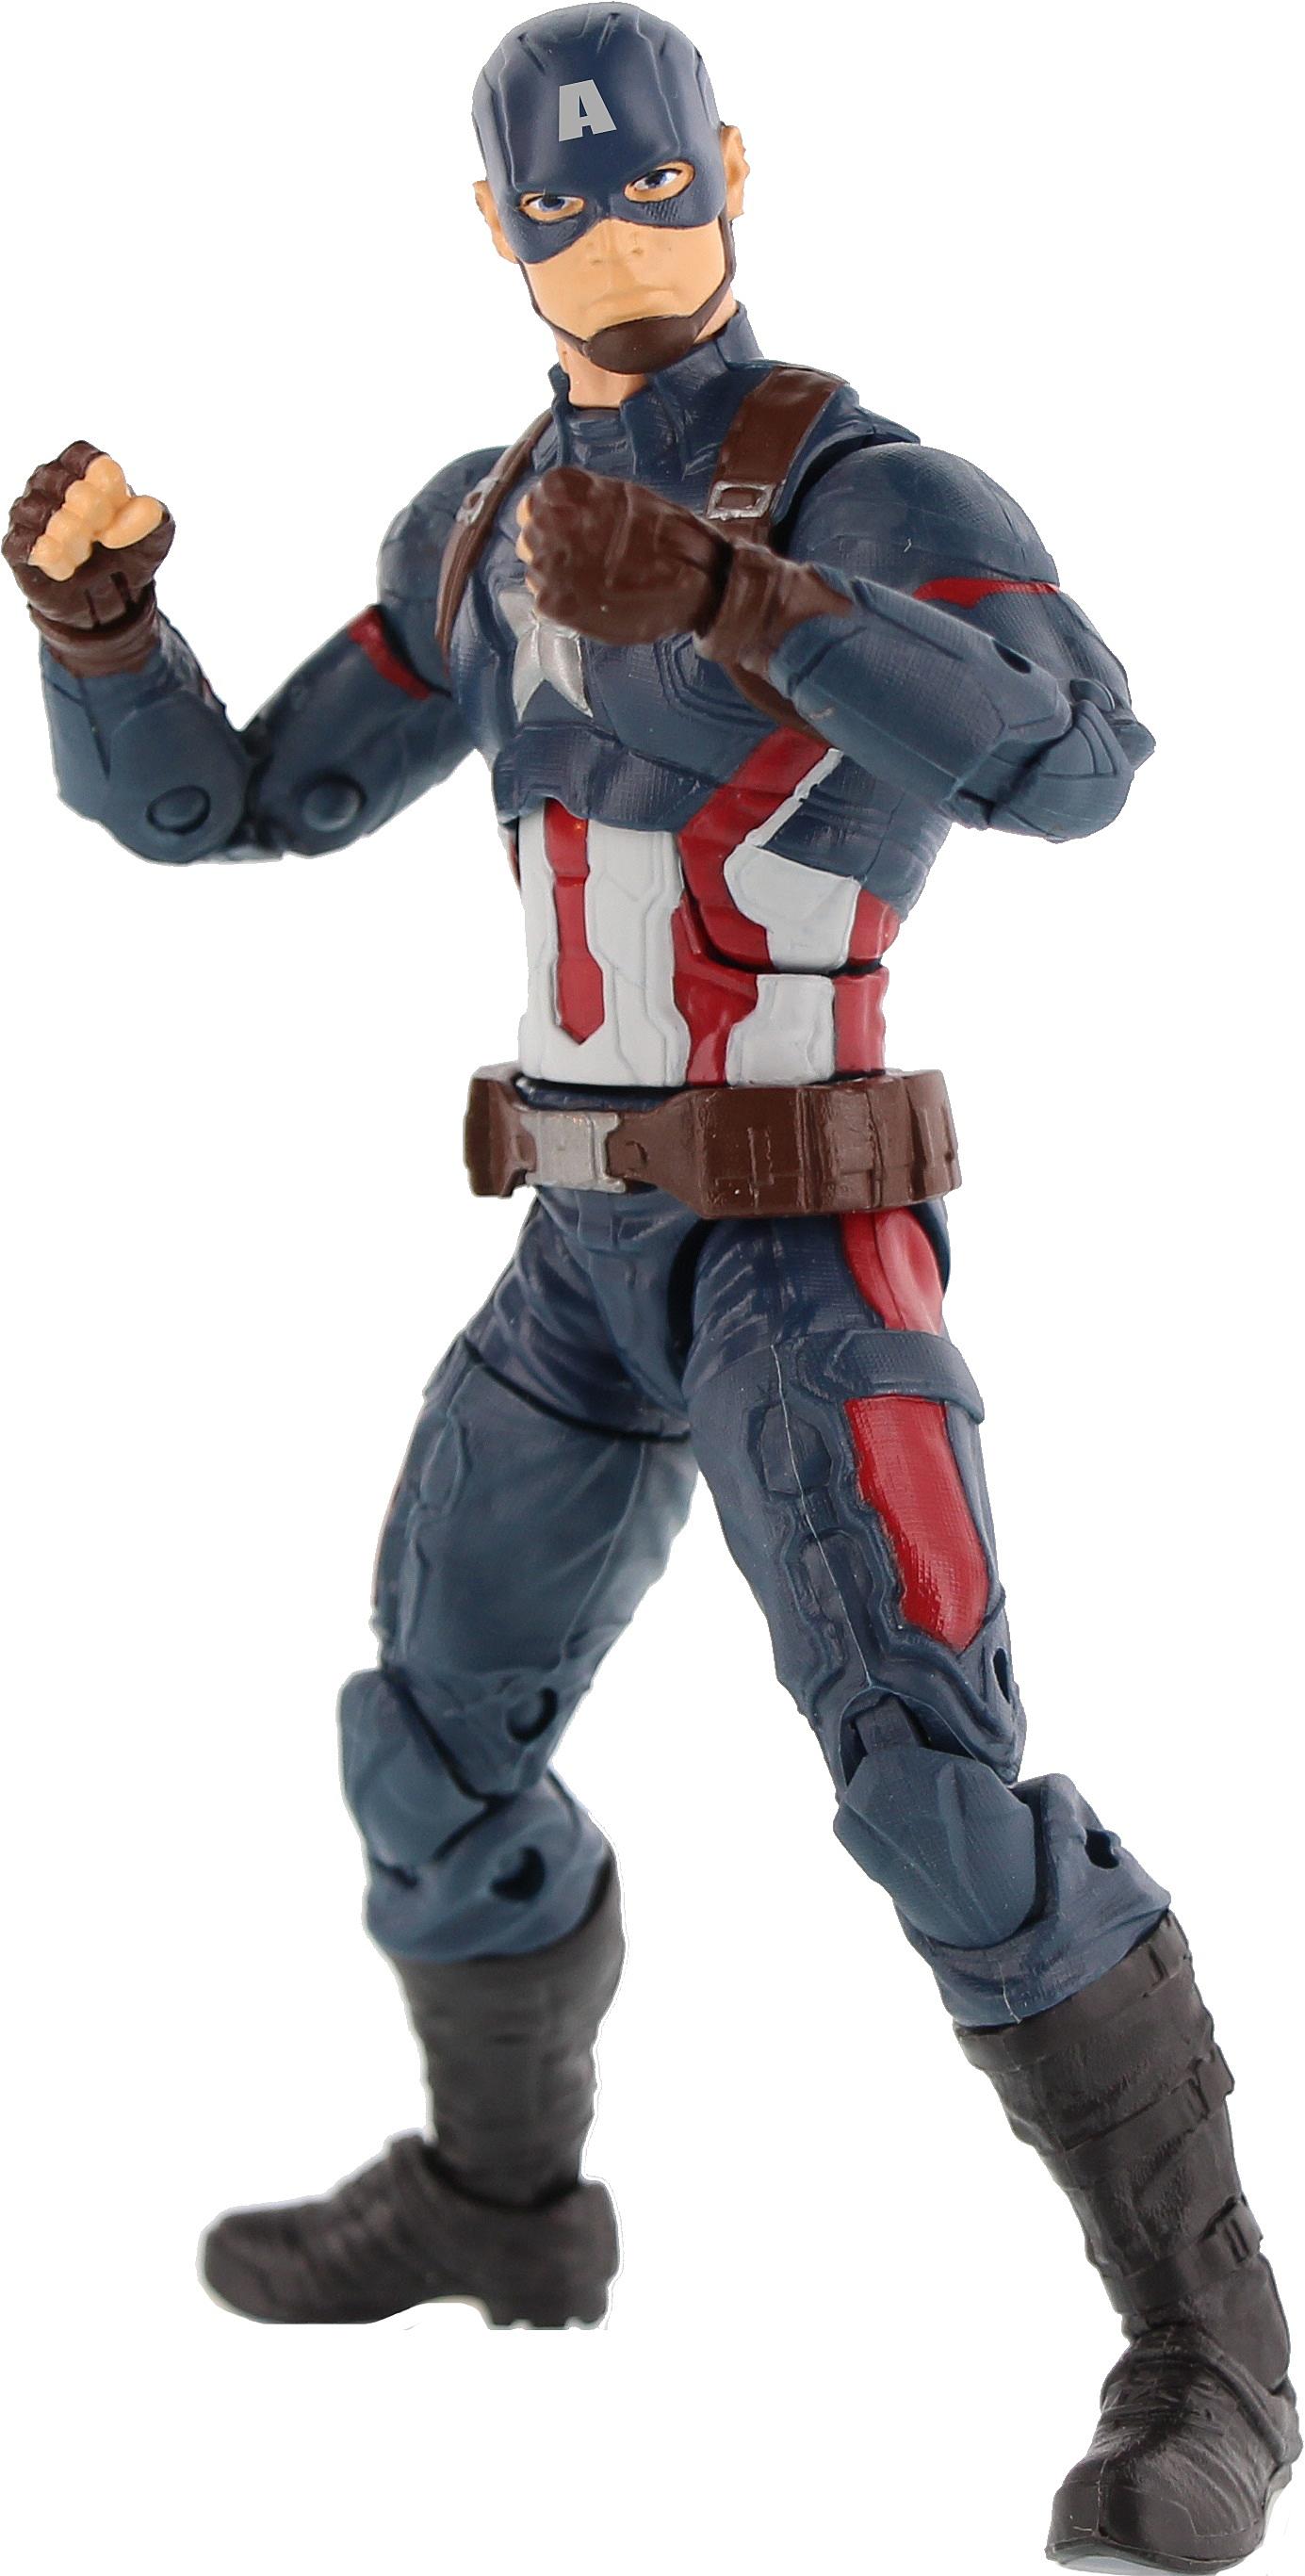 Civil War' Spider-Man Gets His First Figure This Summer